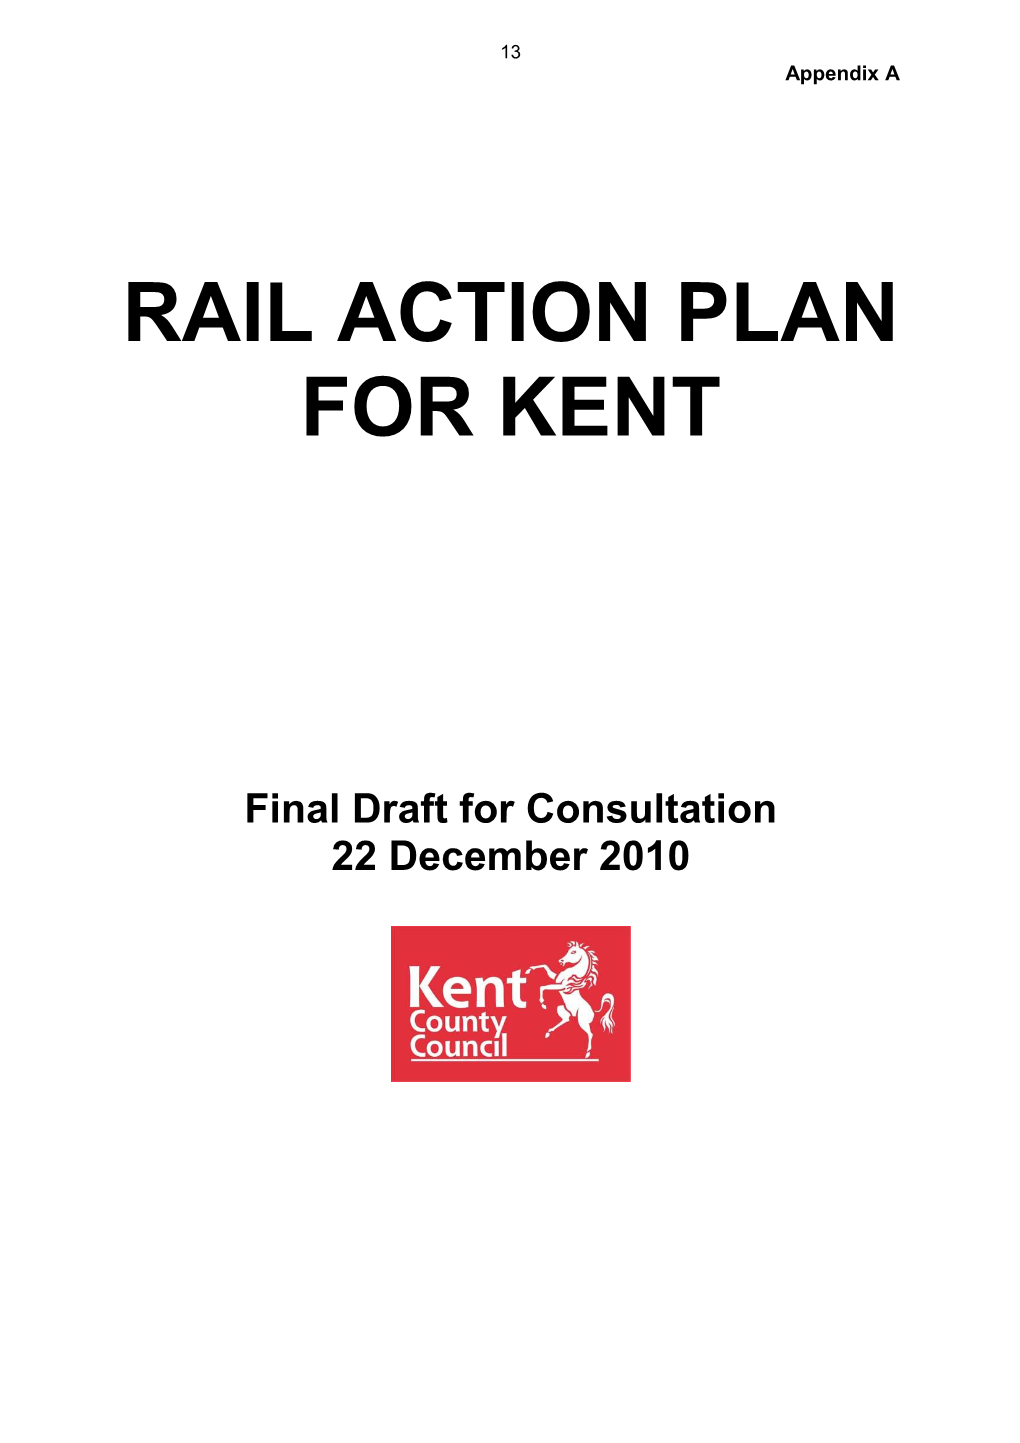 POSC Rail Action Plan for Kent Report App a 18 01 11